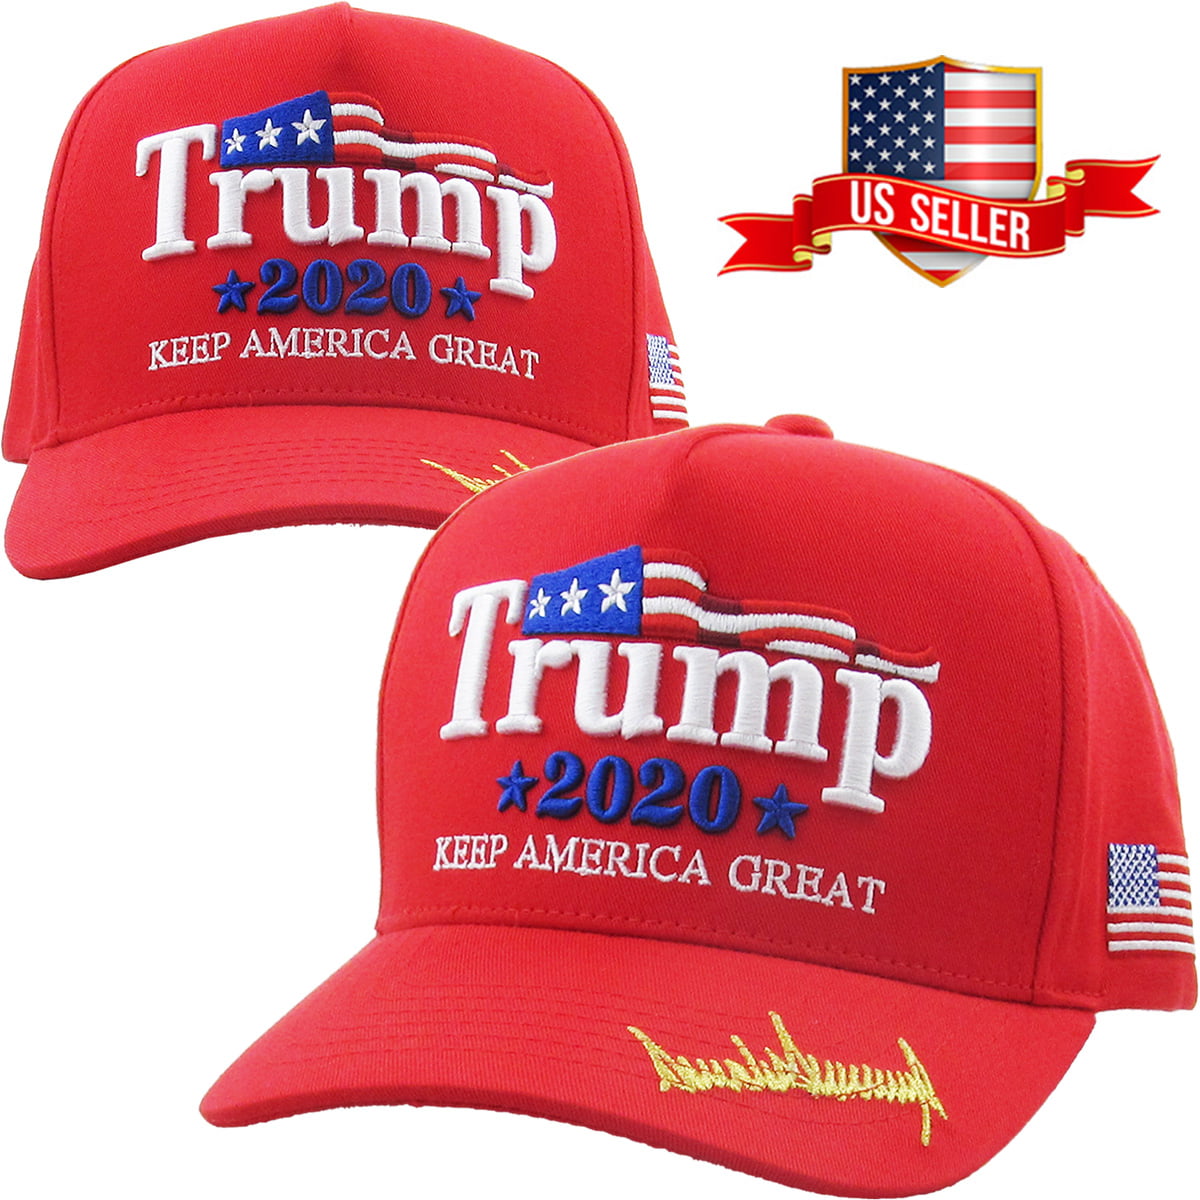 TRUMP 2020 Red Cap Hat Make America Great Again Keep America Great MAGA KAG USA 